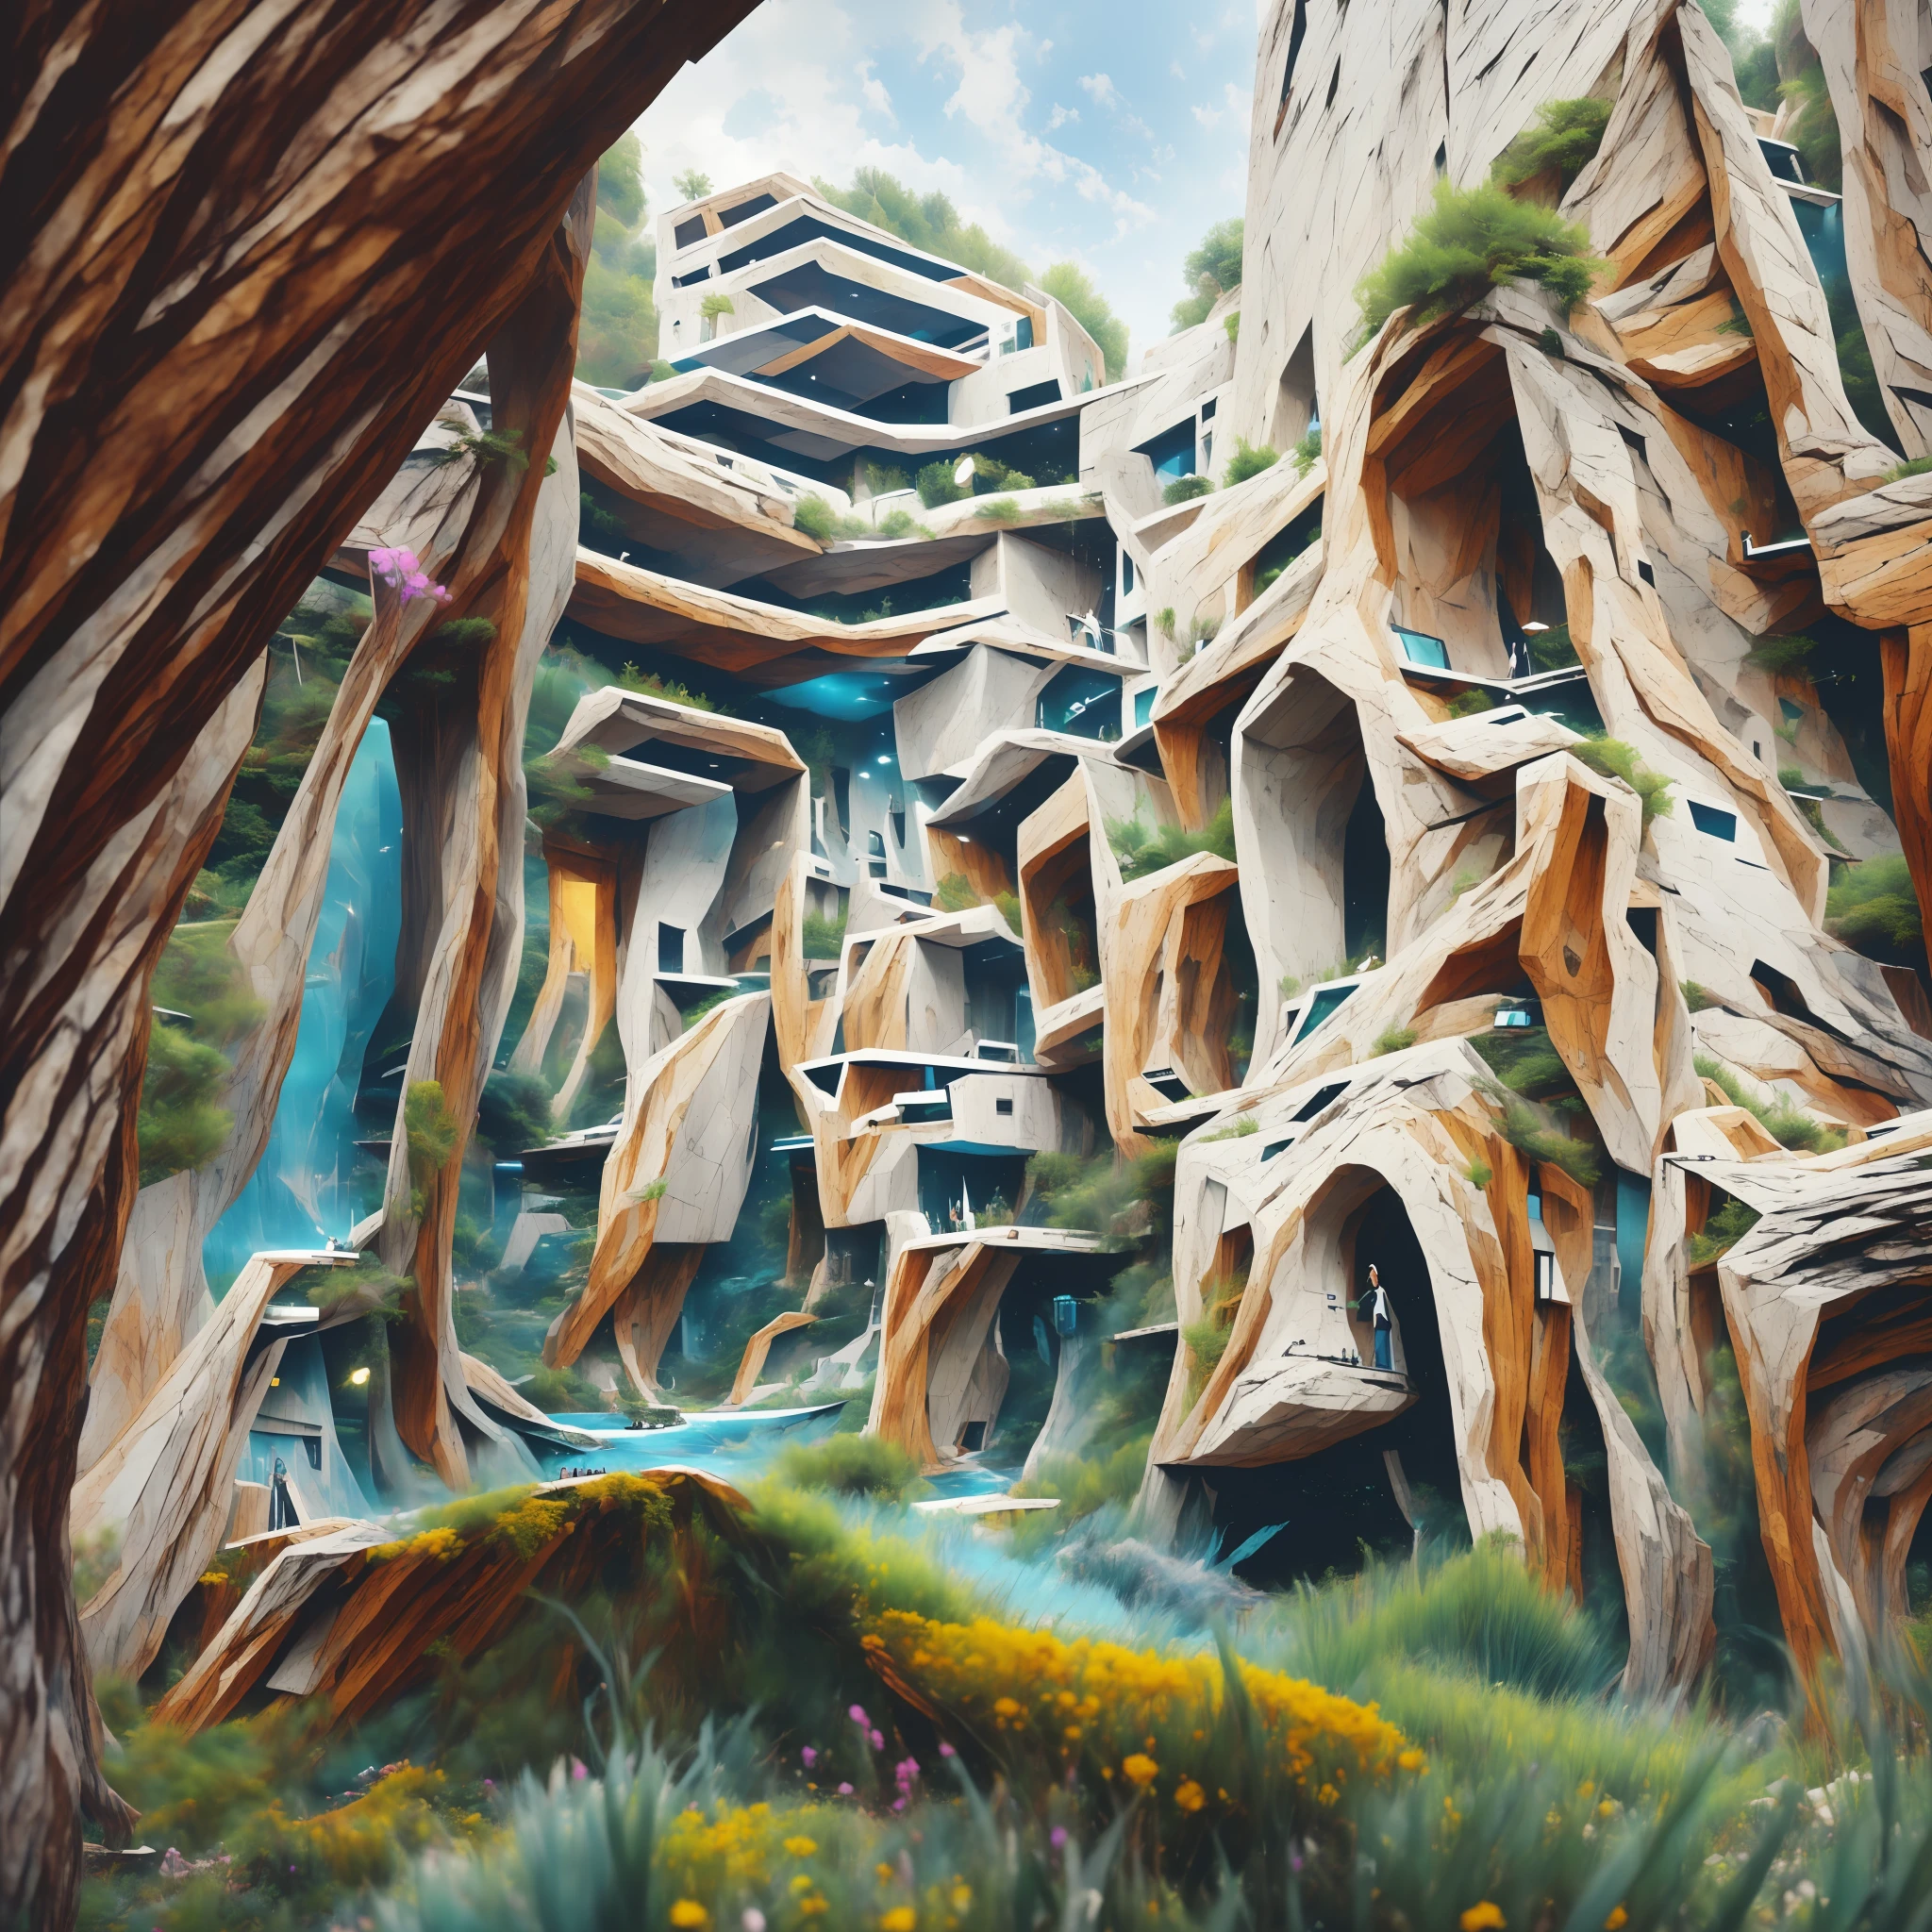 an awesome sunny cheerful day environment concept art of Futuristic design of cave architecture interiors concept art on grand Canyon caves 自然建筑, 成比例的,详细的, 洞穴建筑，自然与未来主义建筑在雨林丛林悬崖上相遇，还有巨大的瀑布,暮光之光, 自然与 Aries Moross 风格的现代建筑相融合, 雷姆·库哈斯,丹尼尔·里伯斯金, 让·努维尔, 保罗·索莱里,伊东丰雄 (Toyo Ito) 和菲利普·约翰逊 (Philip Johnson) 采用干笔绘画风格 ,明暗对照村,悬崖边住宅区, 混合开发,自然建筑,鲜艳的色彩,高层楼梯, 阳台, 玻璃幕墙,用岩石雕刻而成, 杰作, 成比例的, 详细的, artstation 上的热门, 美丽的灯光, 实际的, 错综复杂